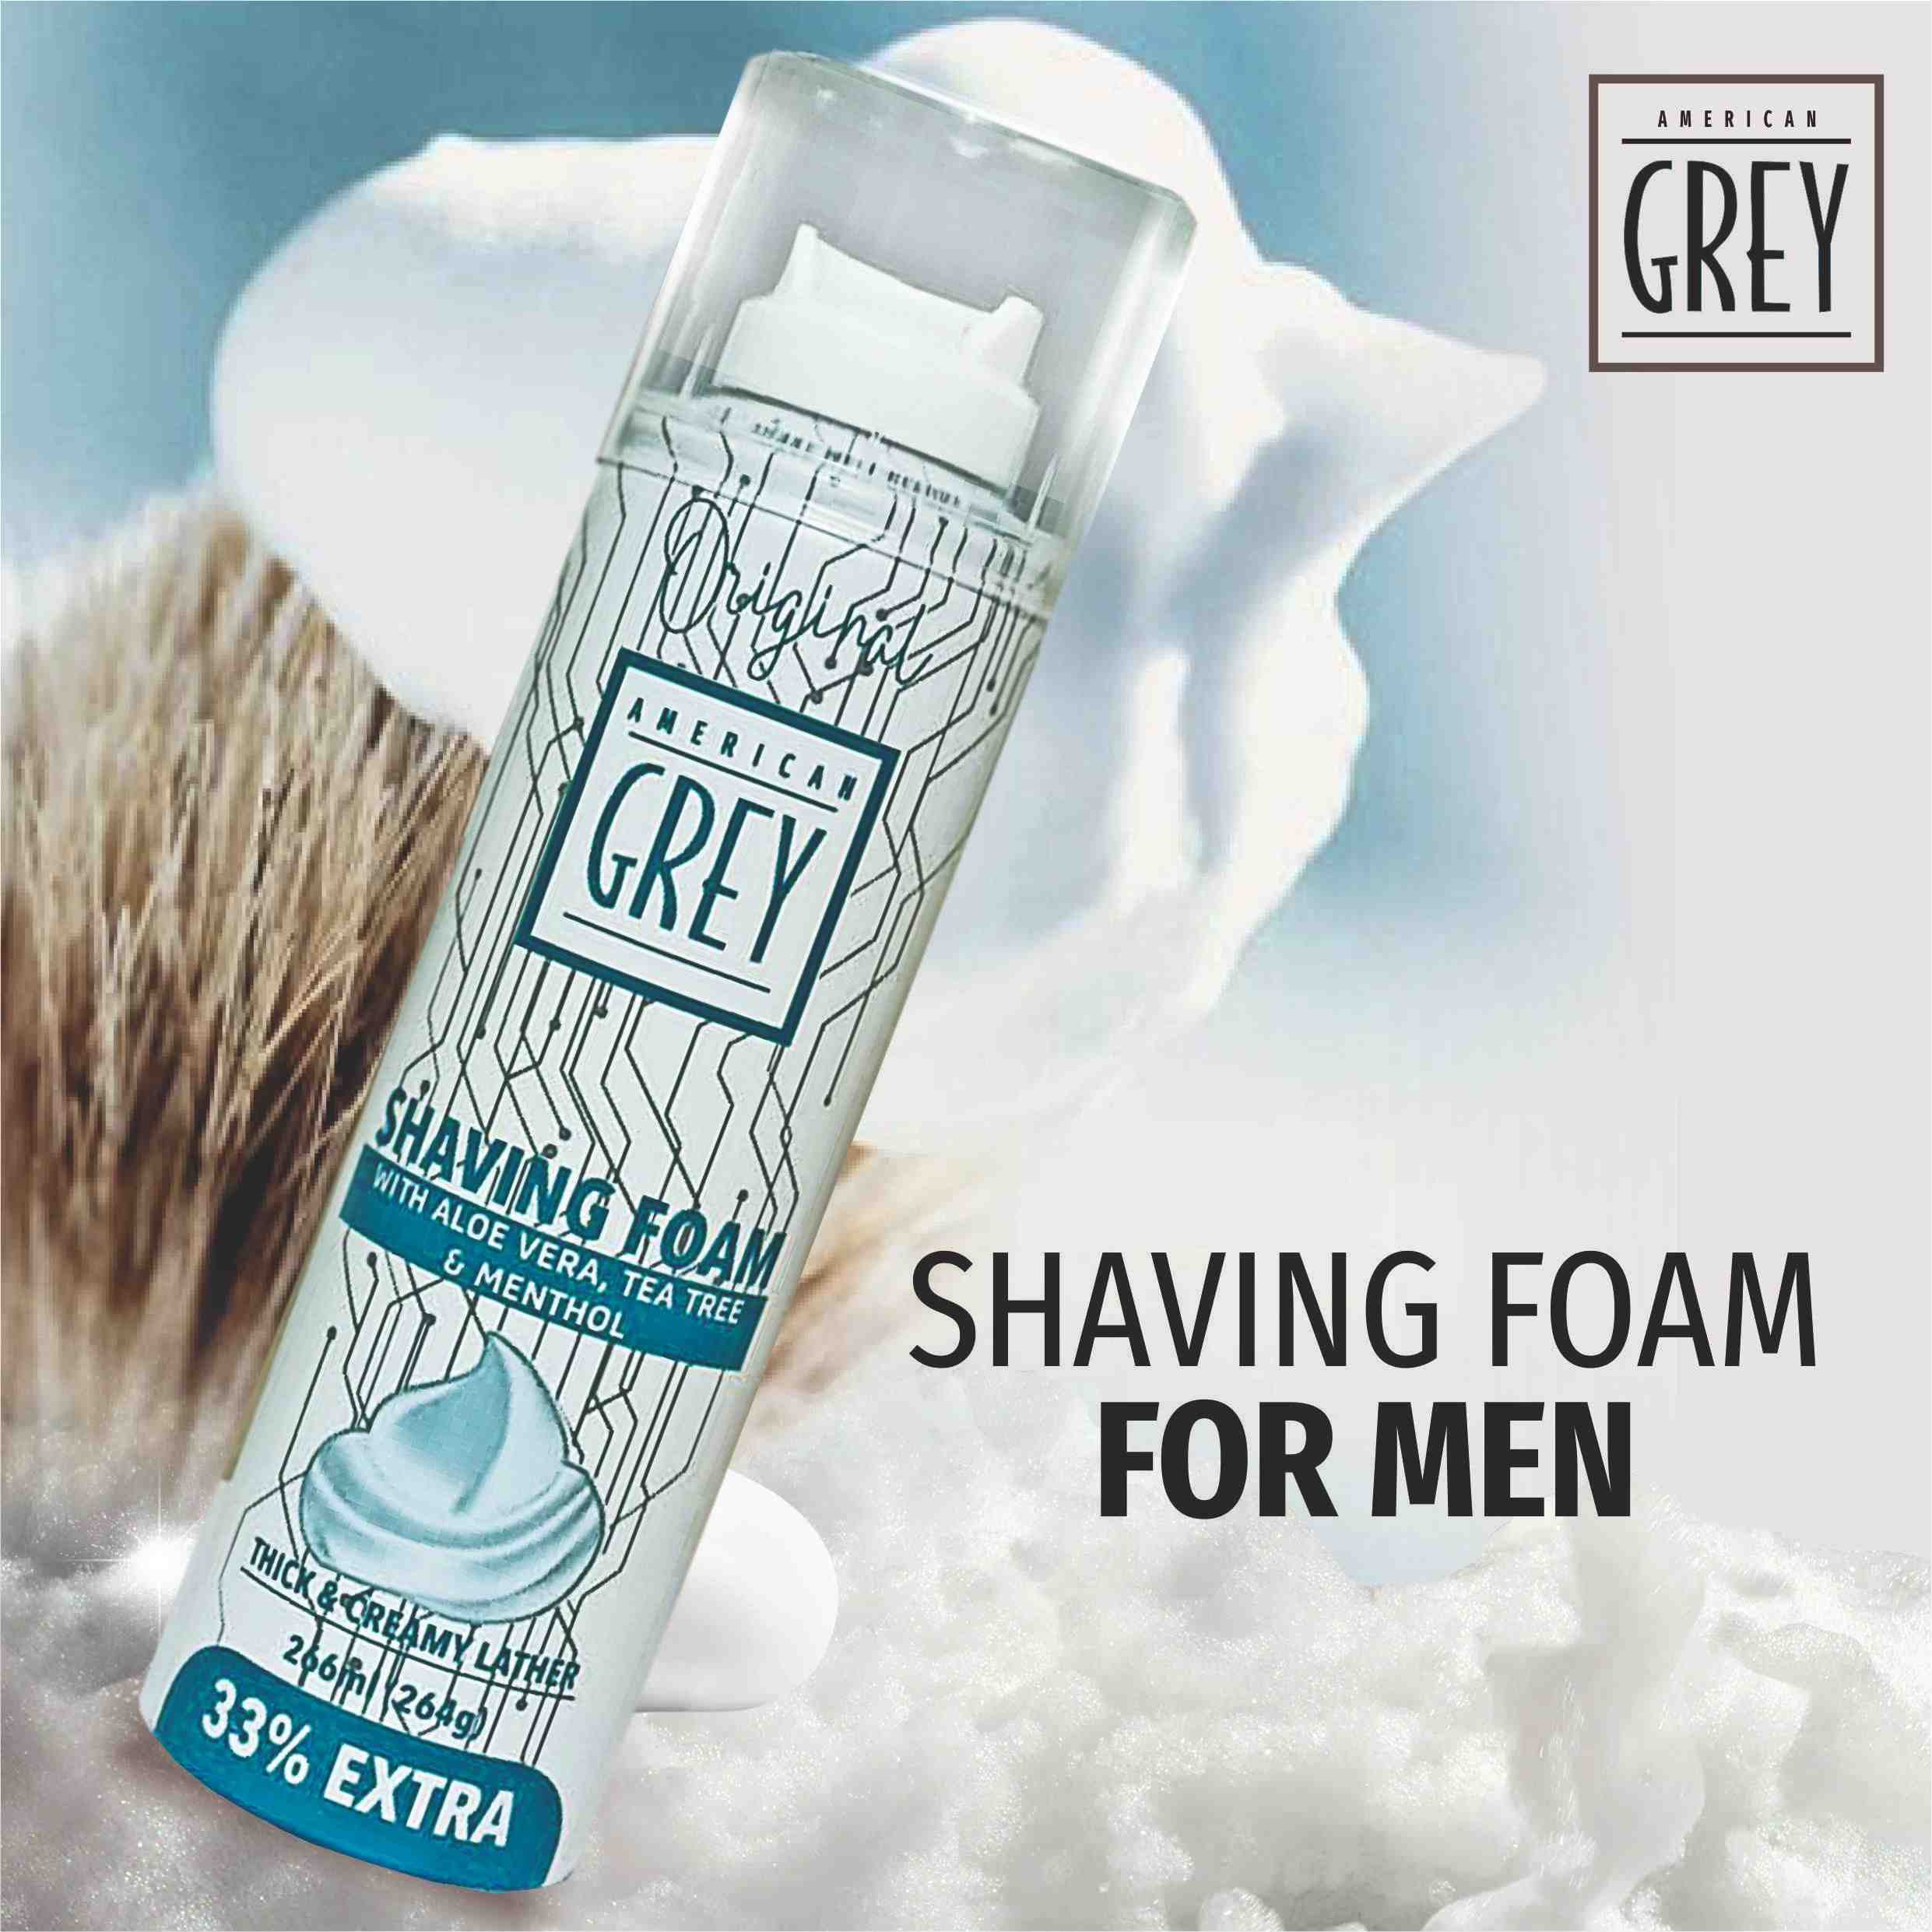 buy shaving foam online- american grey